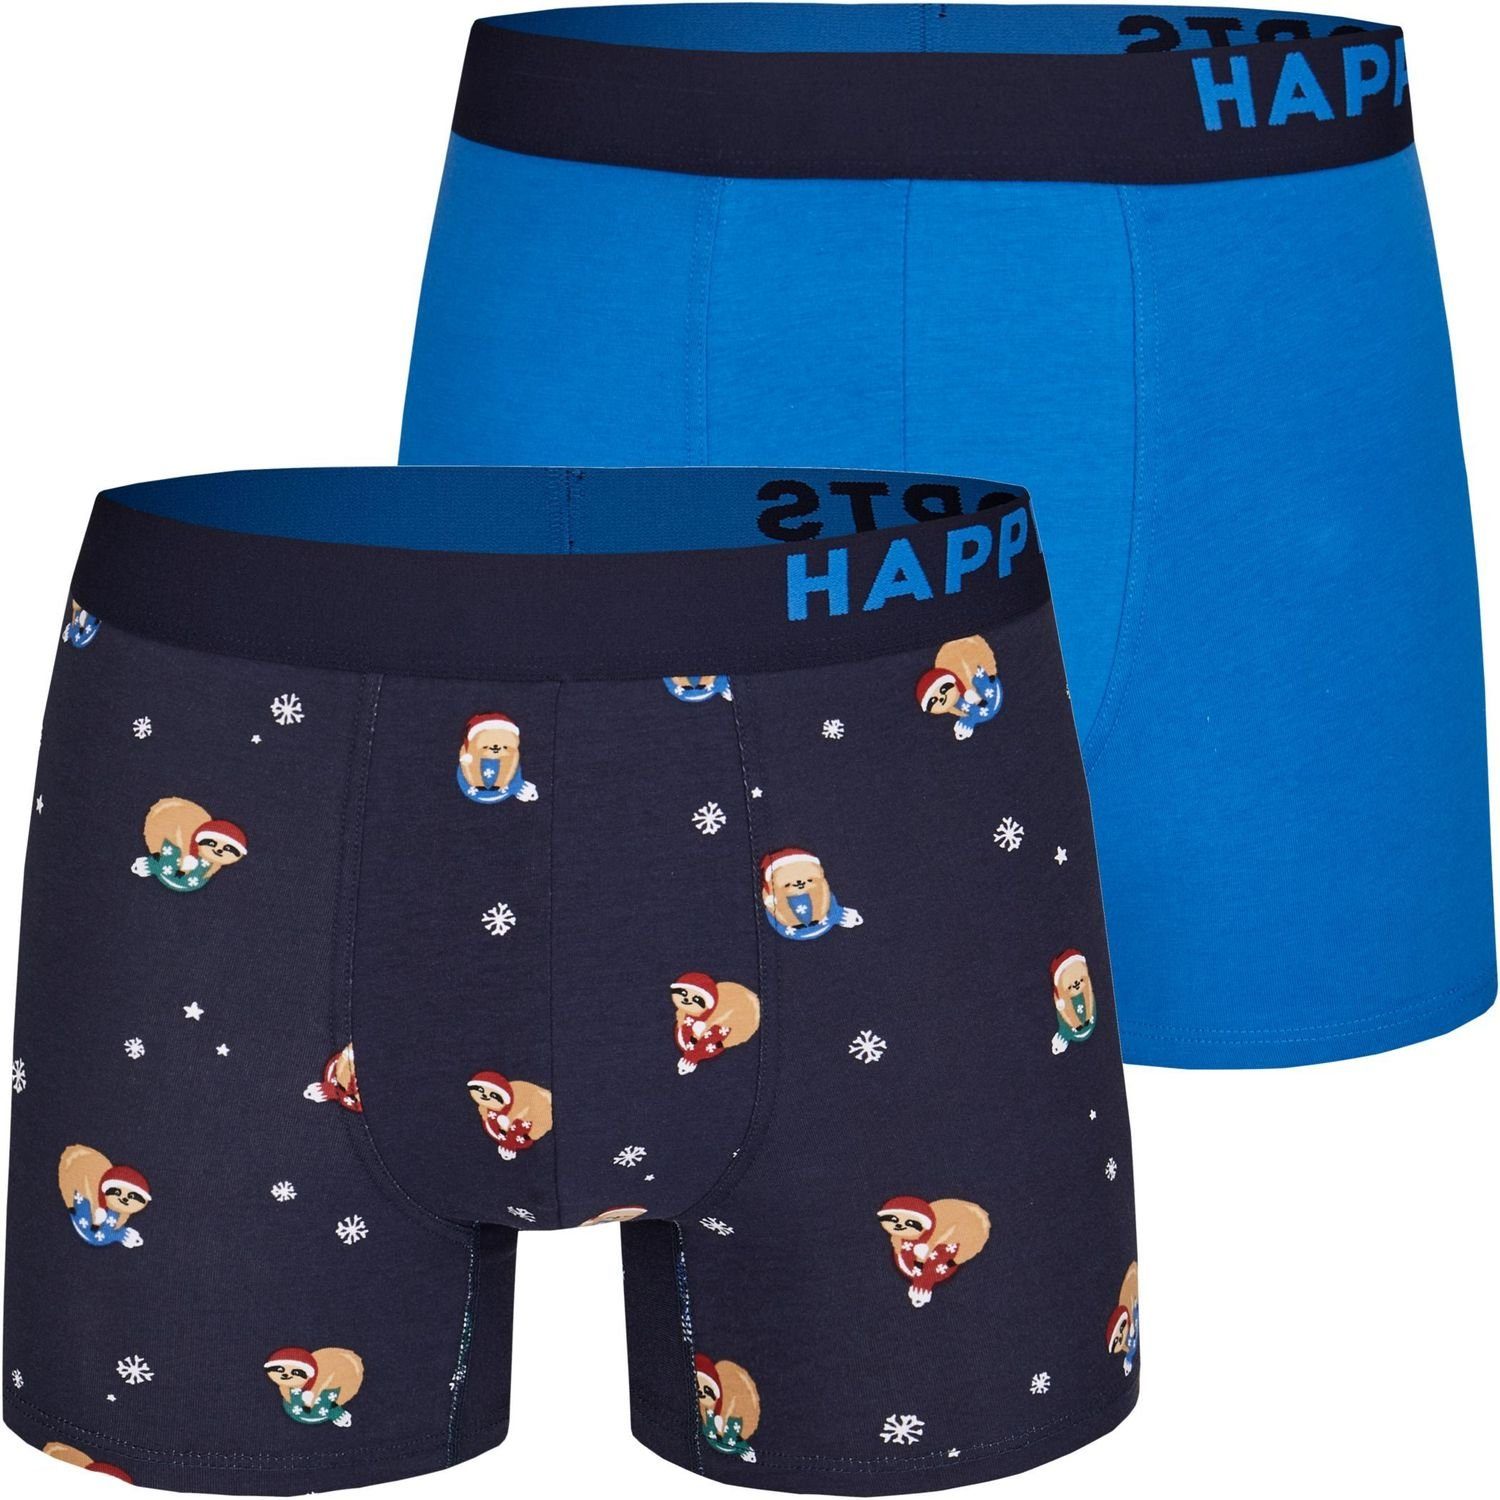 HAPPY SHORTS Trunk 2 Happy Shorts Pants Jersey Trunk Herren Boxershorts Boxer Motiv Faultier auf der Weihnachtskugel (1-St) Sloth on Christmas Ball | Boxershorts